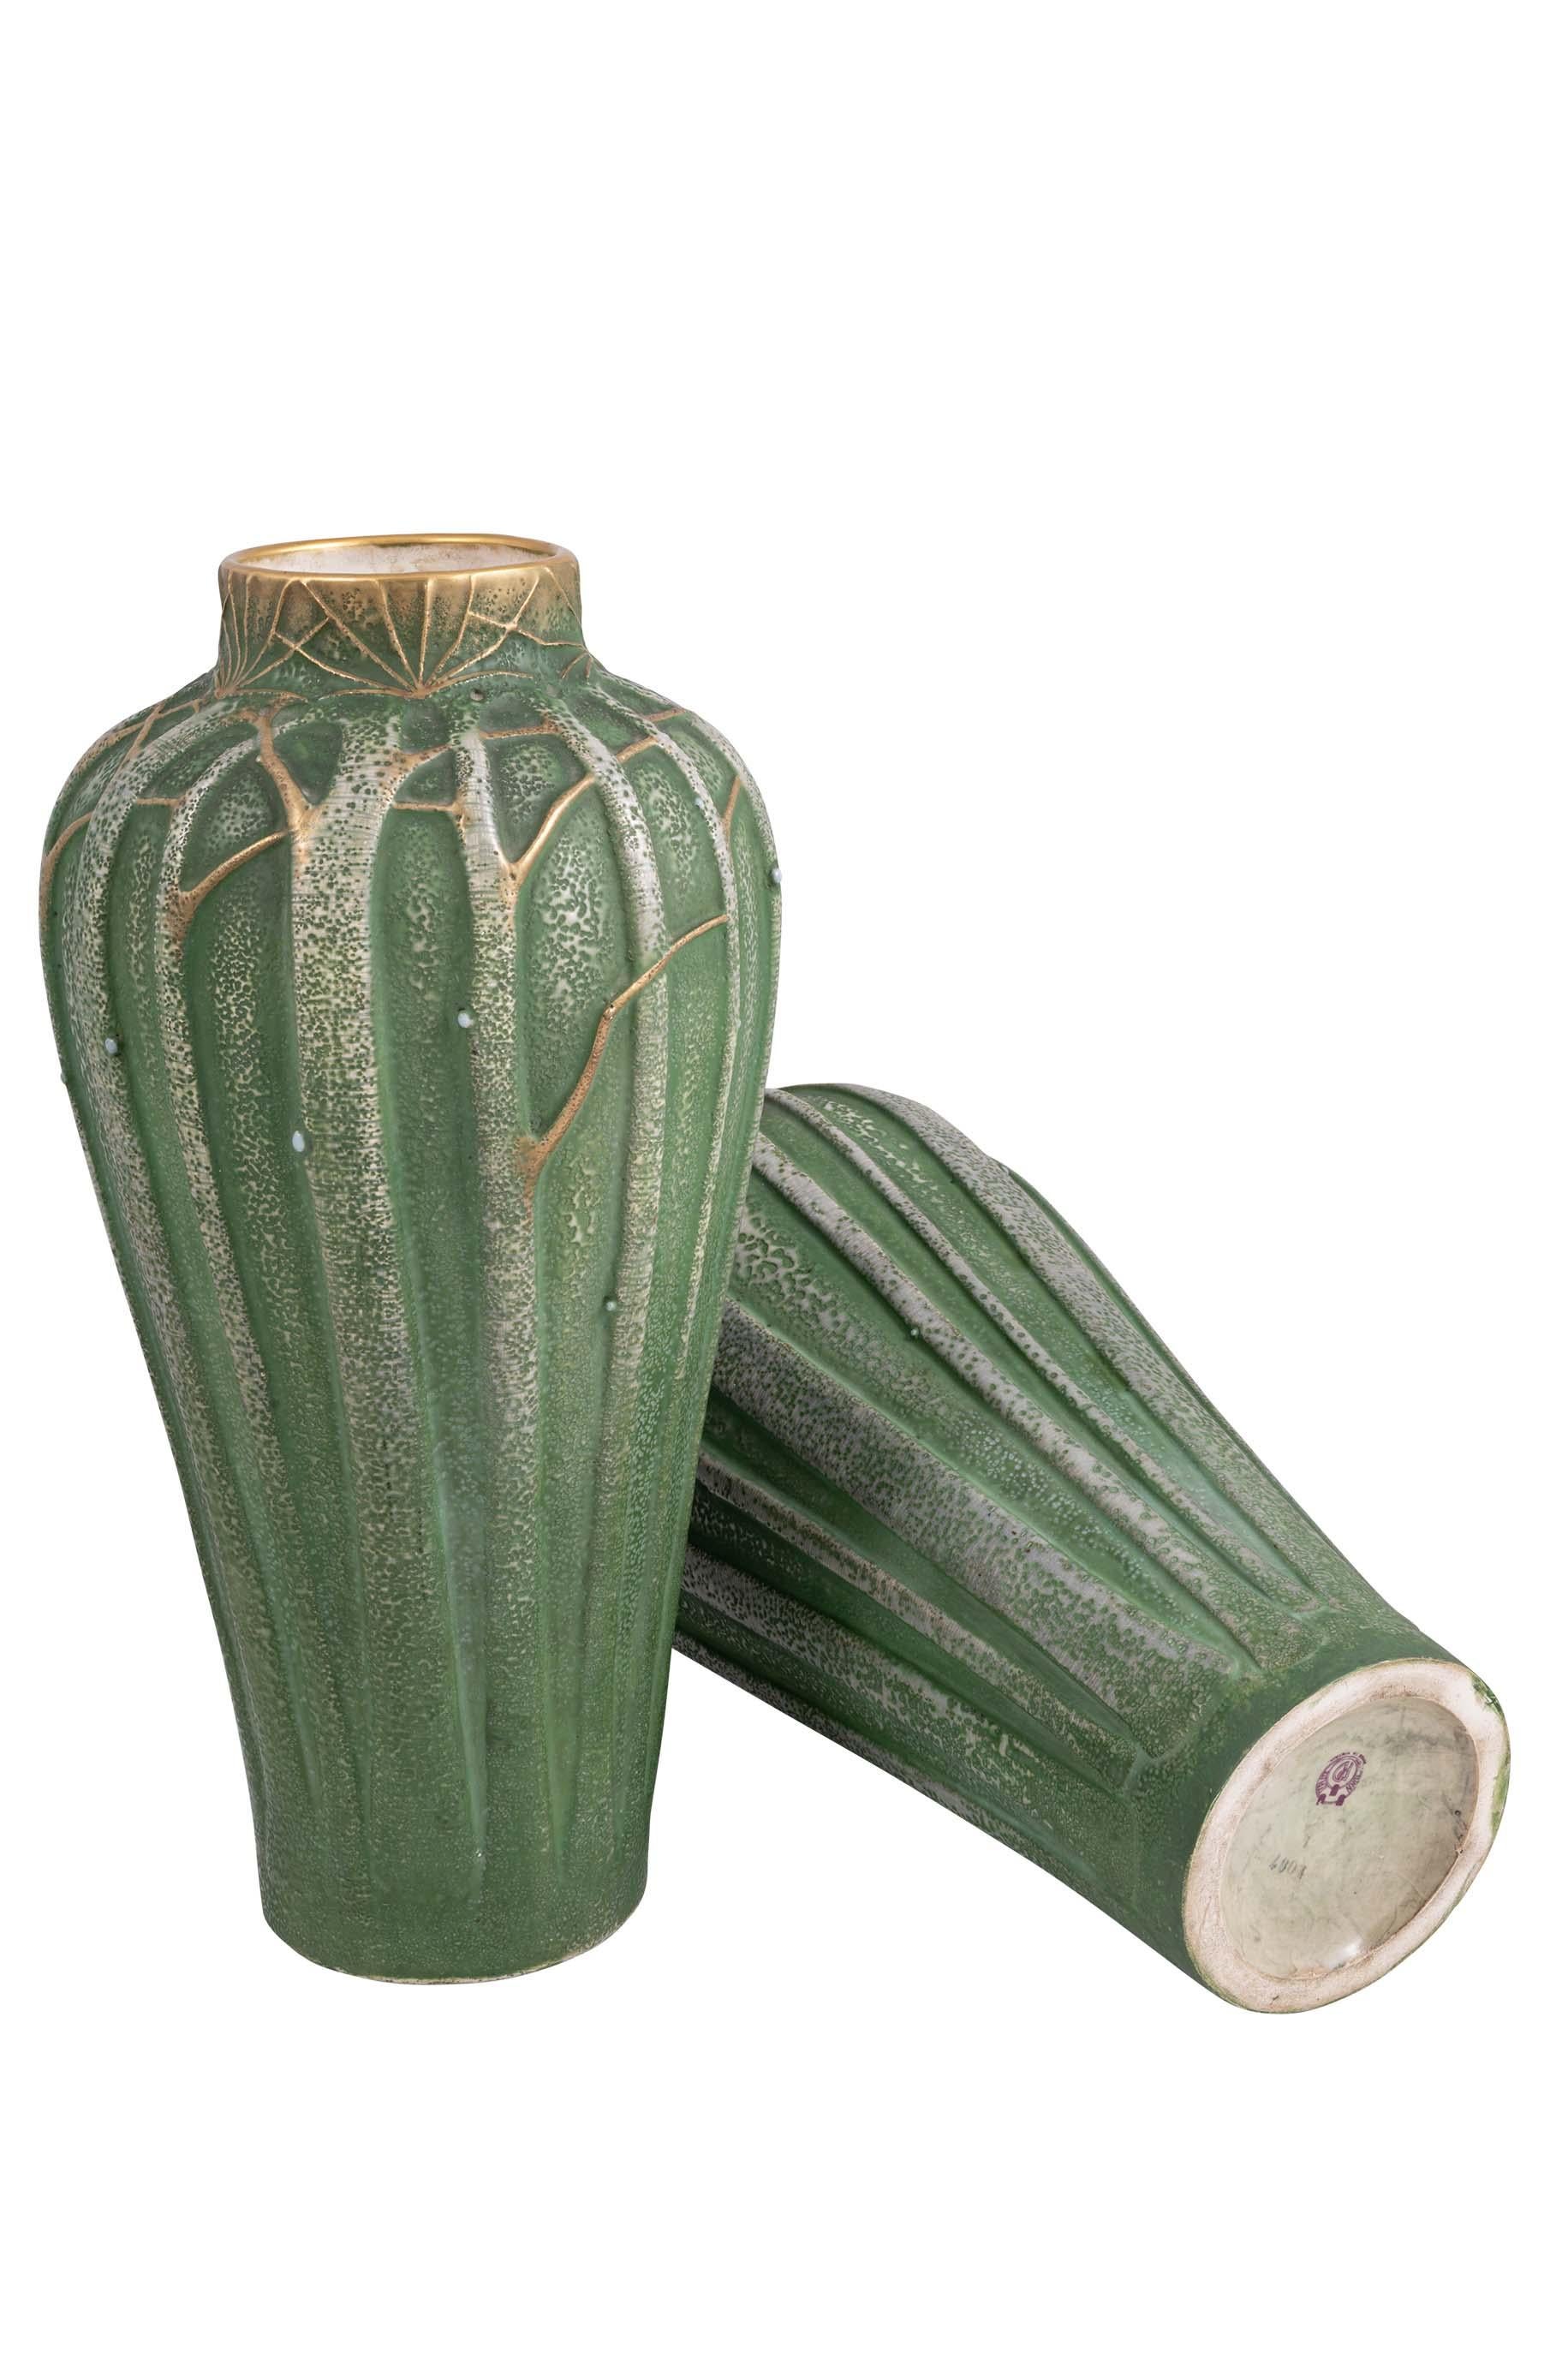 Enameled Pair of Vases Paul Dachsel Art Nouveau Amphora circa 1906 Ivory Porcelain Green